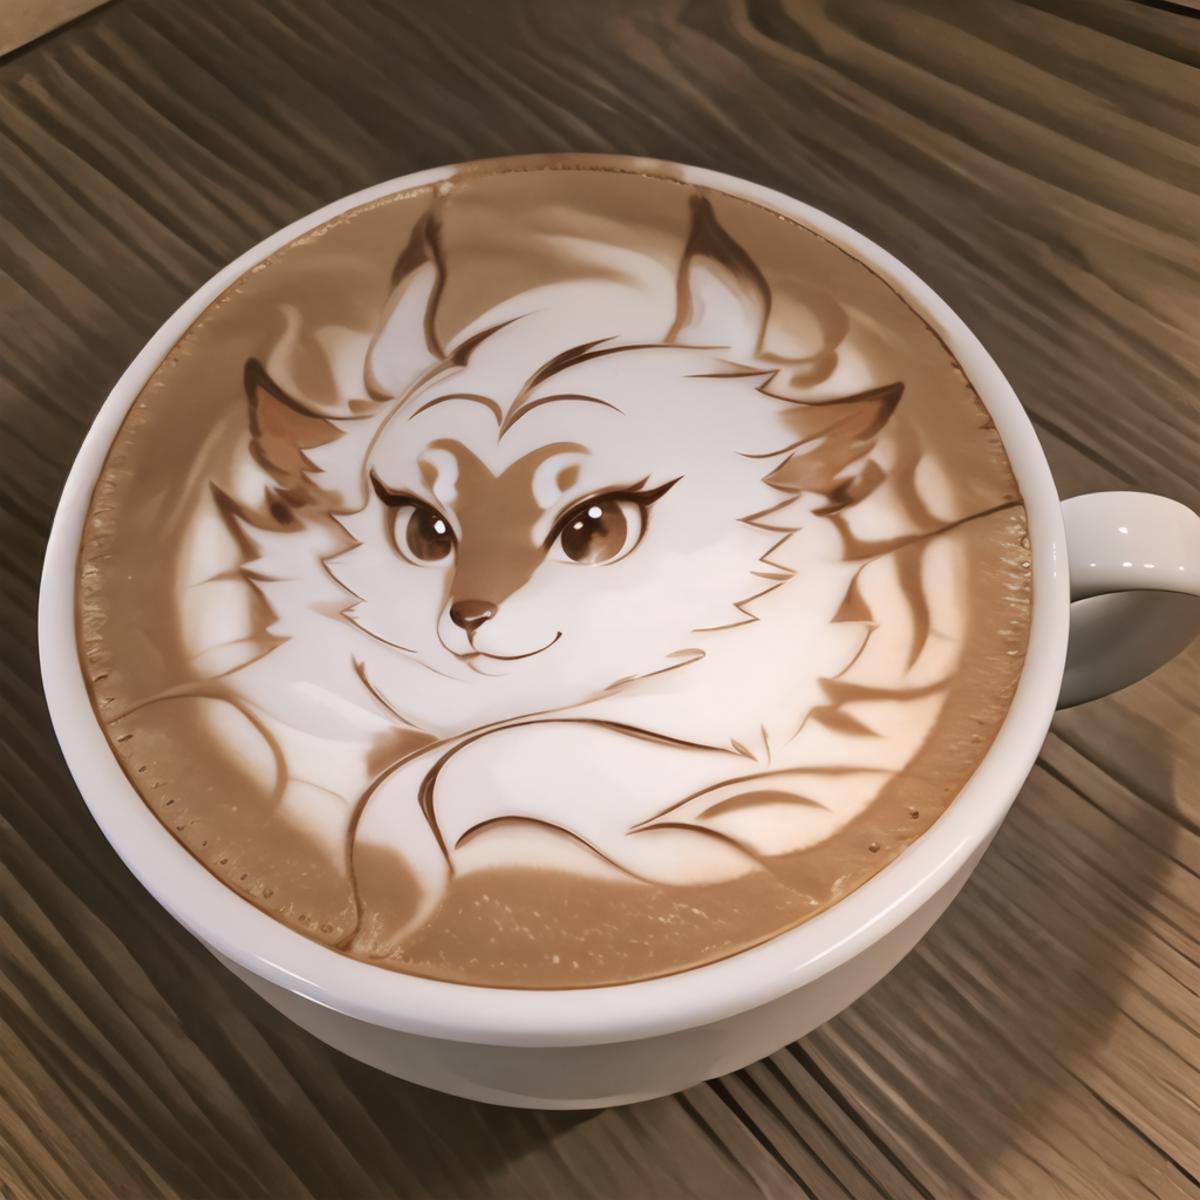 Latte Art | Concept LoRA image by FallenIncursio